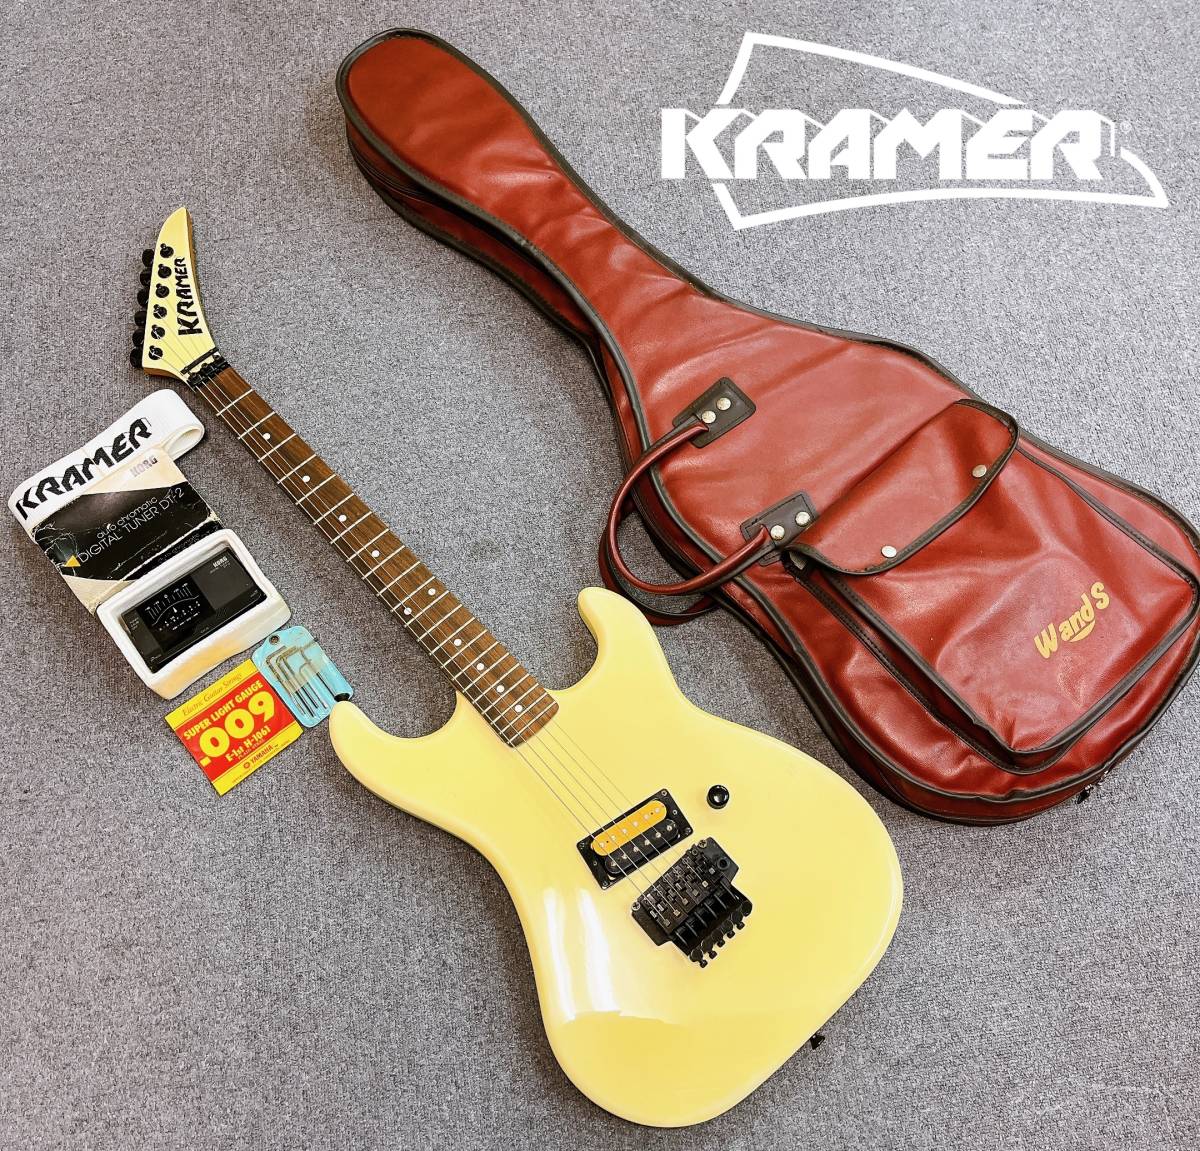 Yahoo!オークション -「kramer usa」(エレキギター) (ギター)の落札